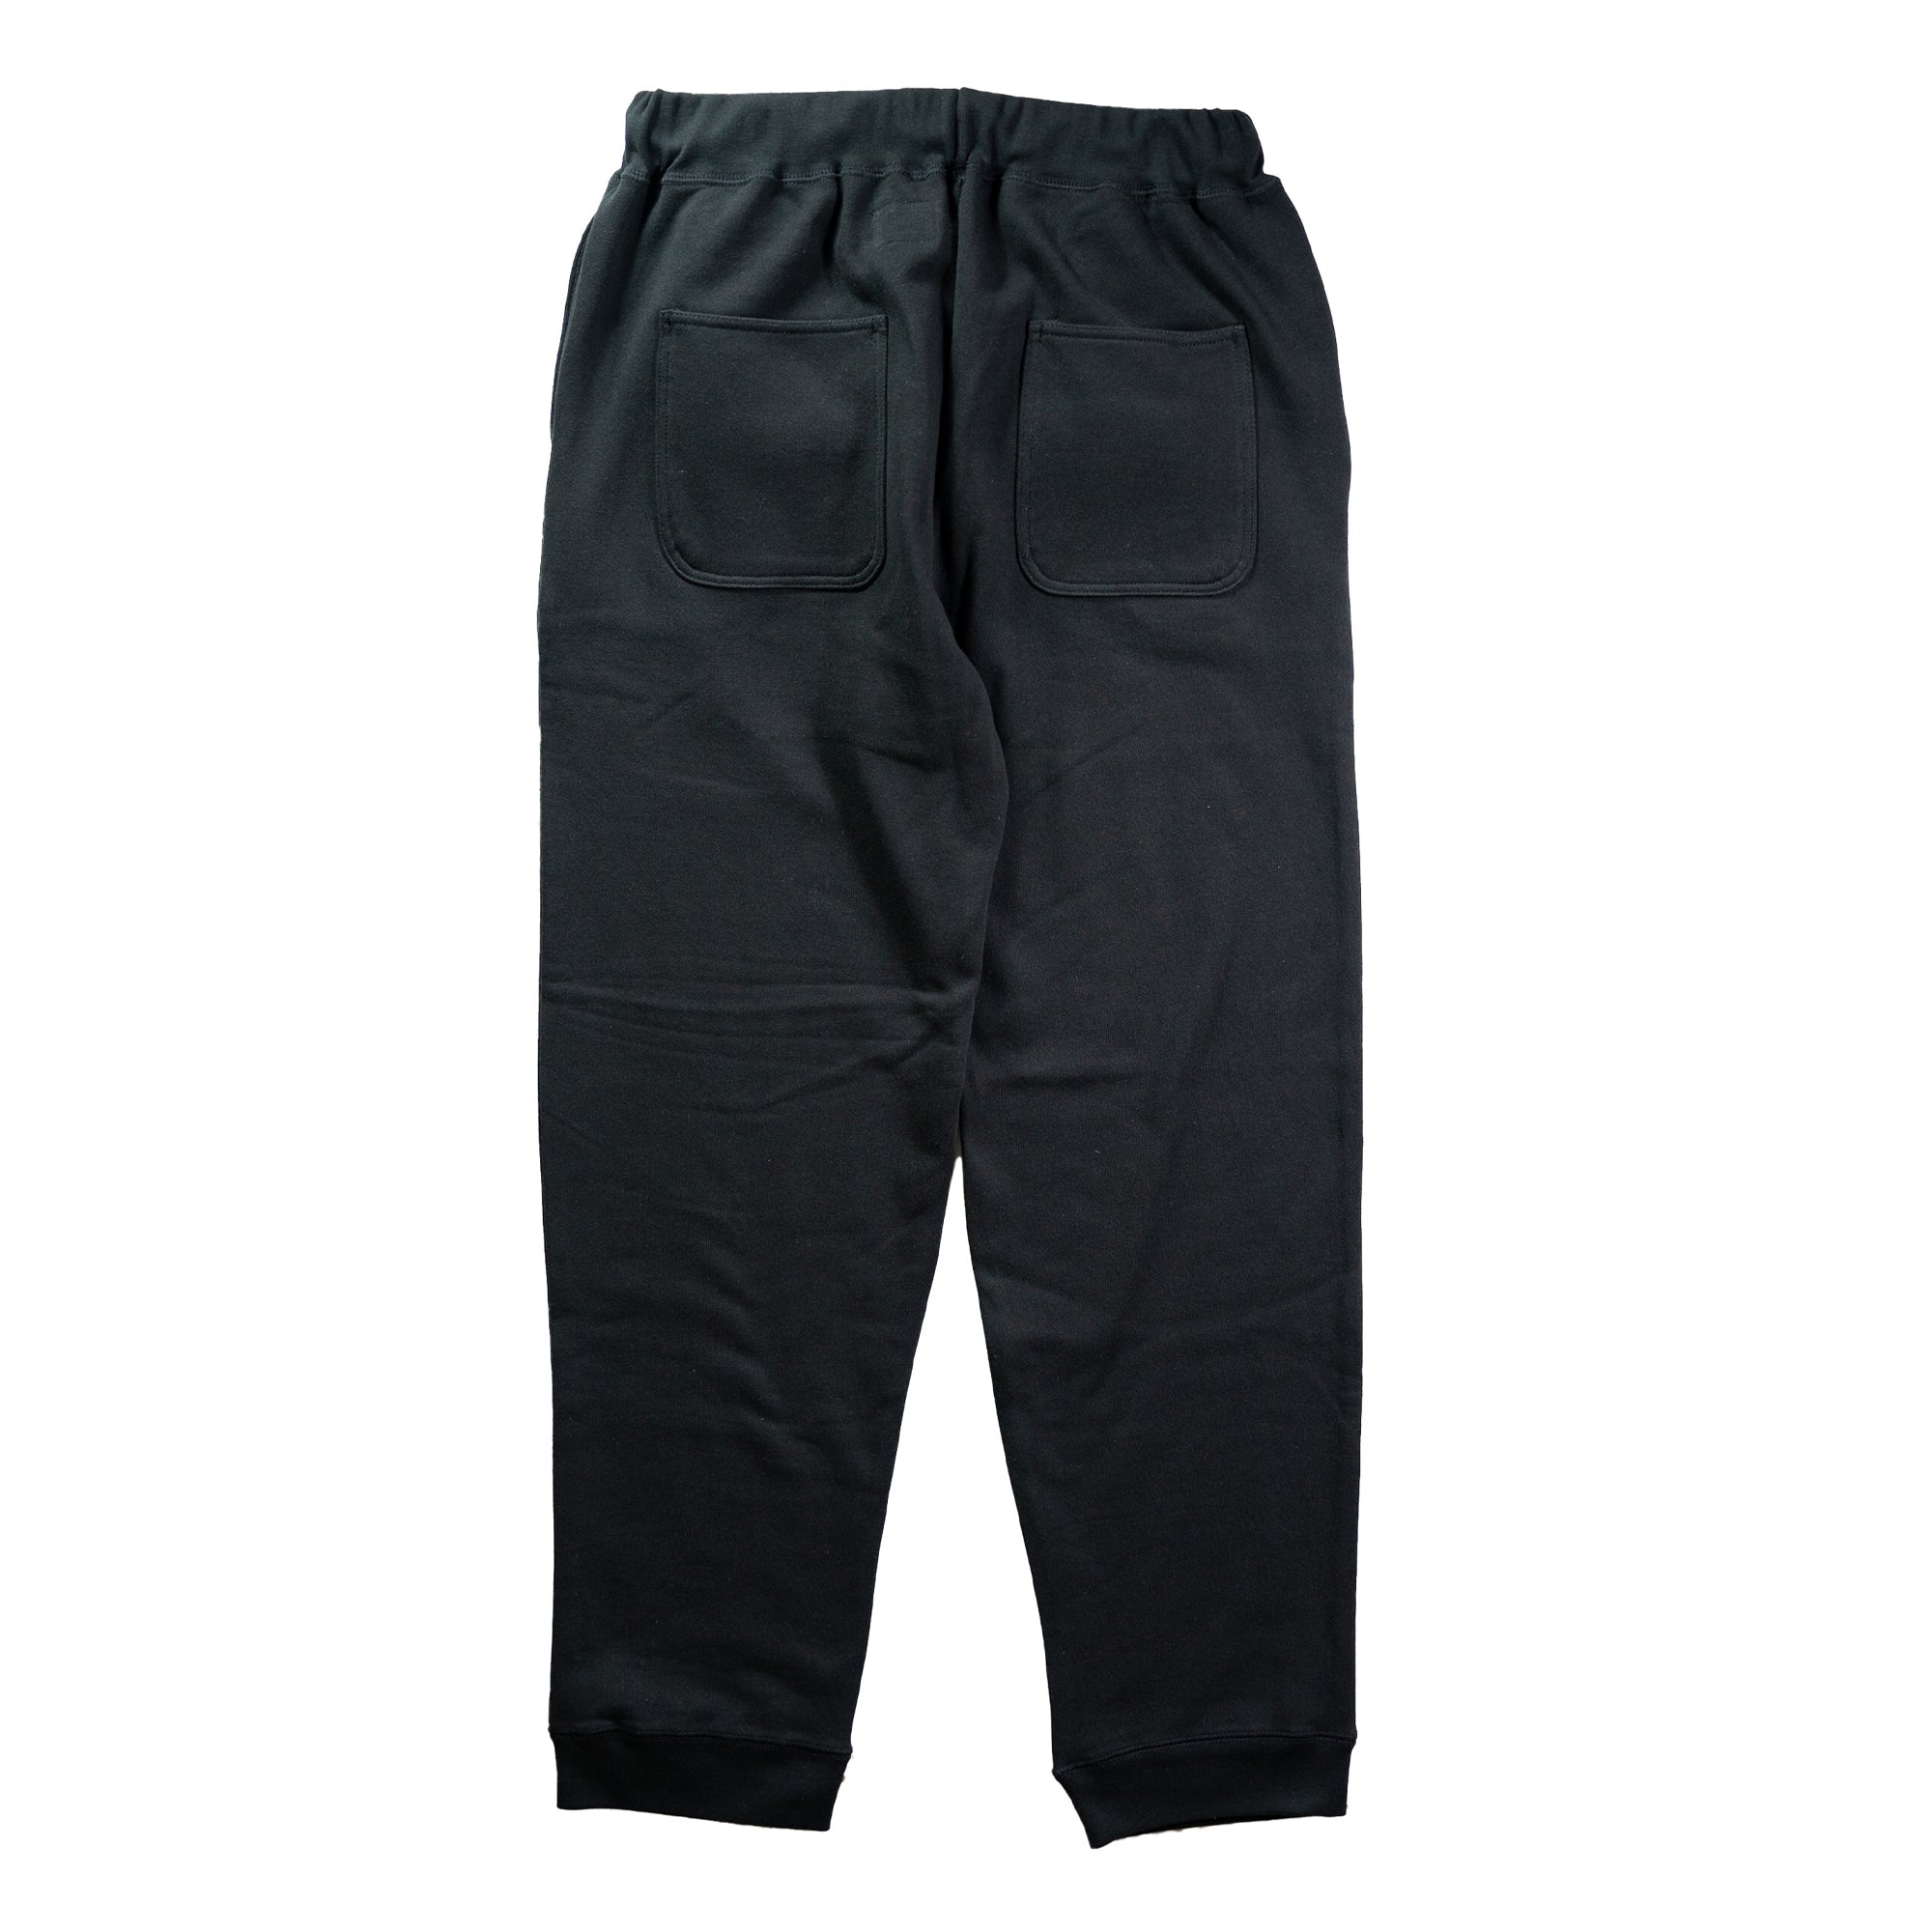 ANDFAMILYS]10.5oz Light Sweat Pants/BLACK – R&Co.